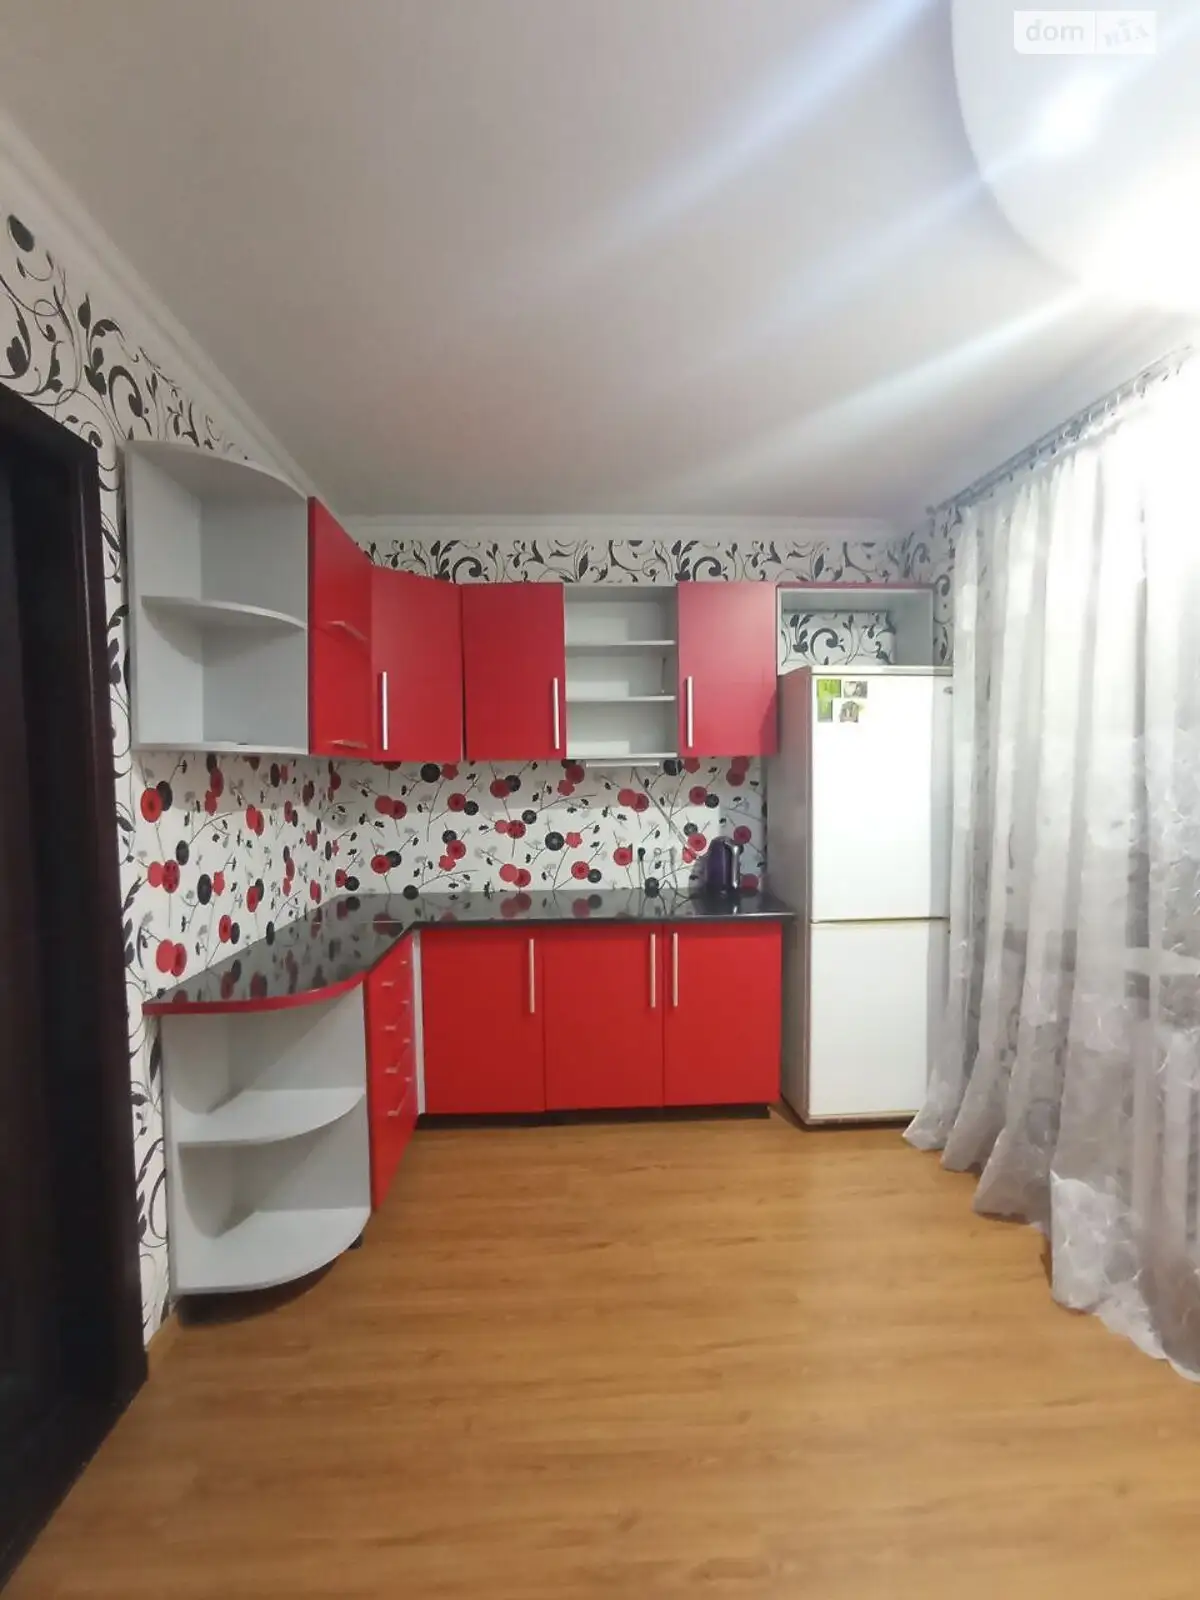 Продается комната 21 кв. м в Ровно - фото 3